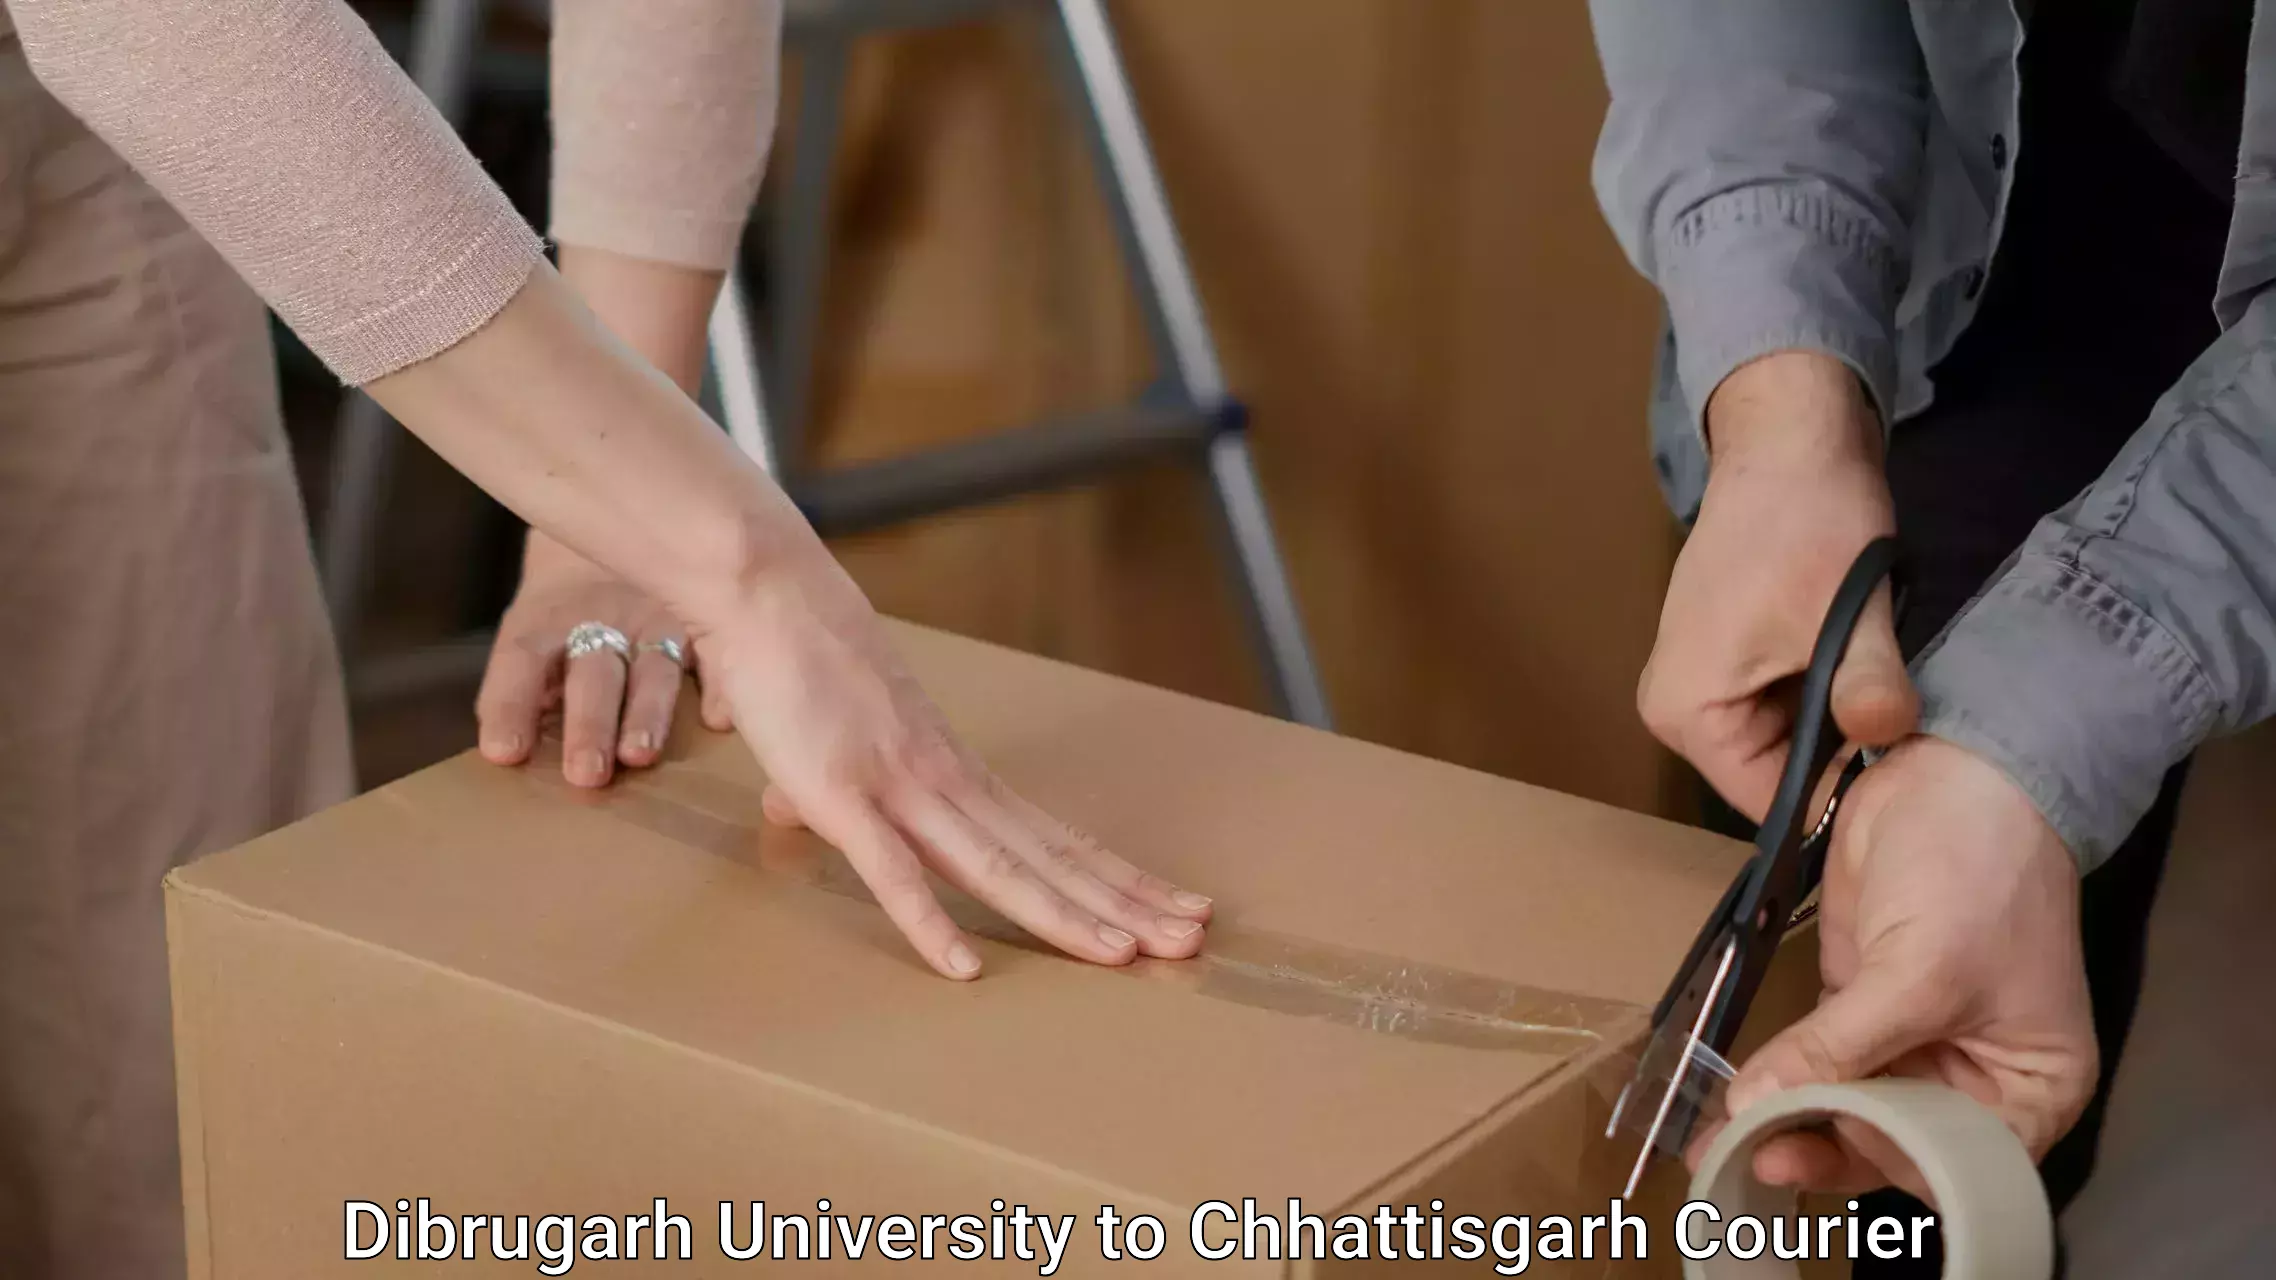 Furniture moving specialists Dibrugarh University to Chhattisgarh